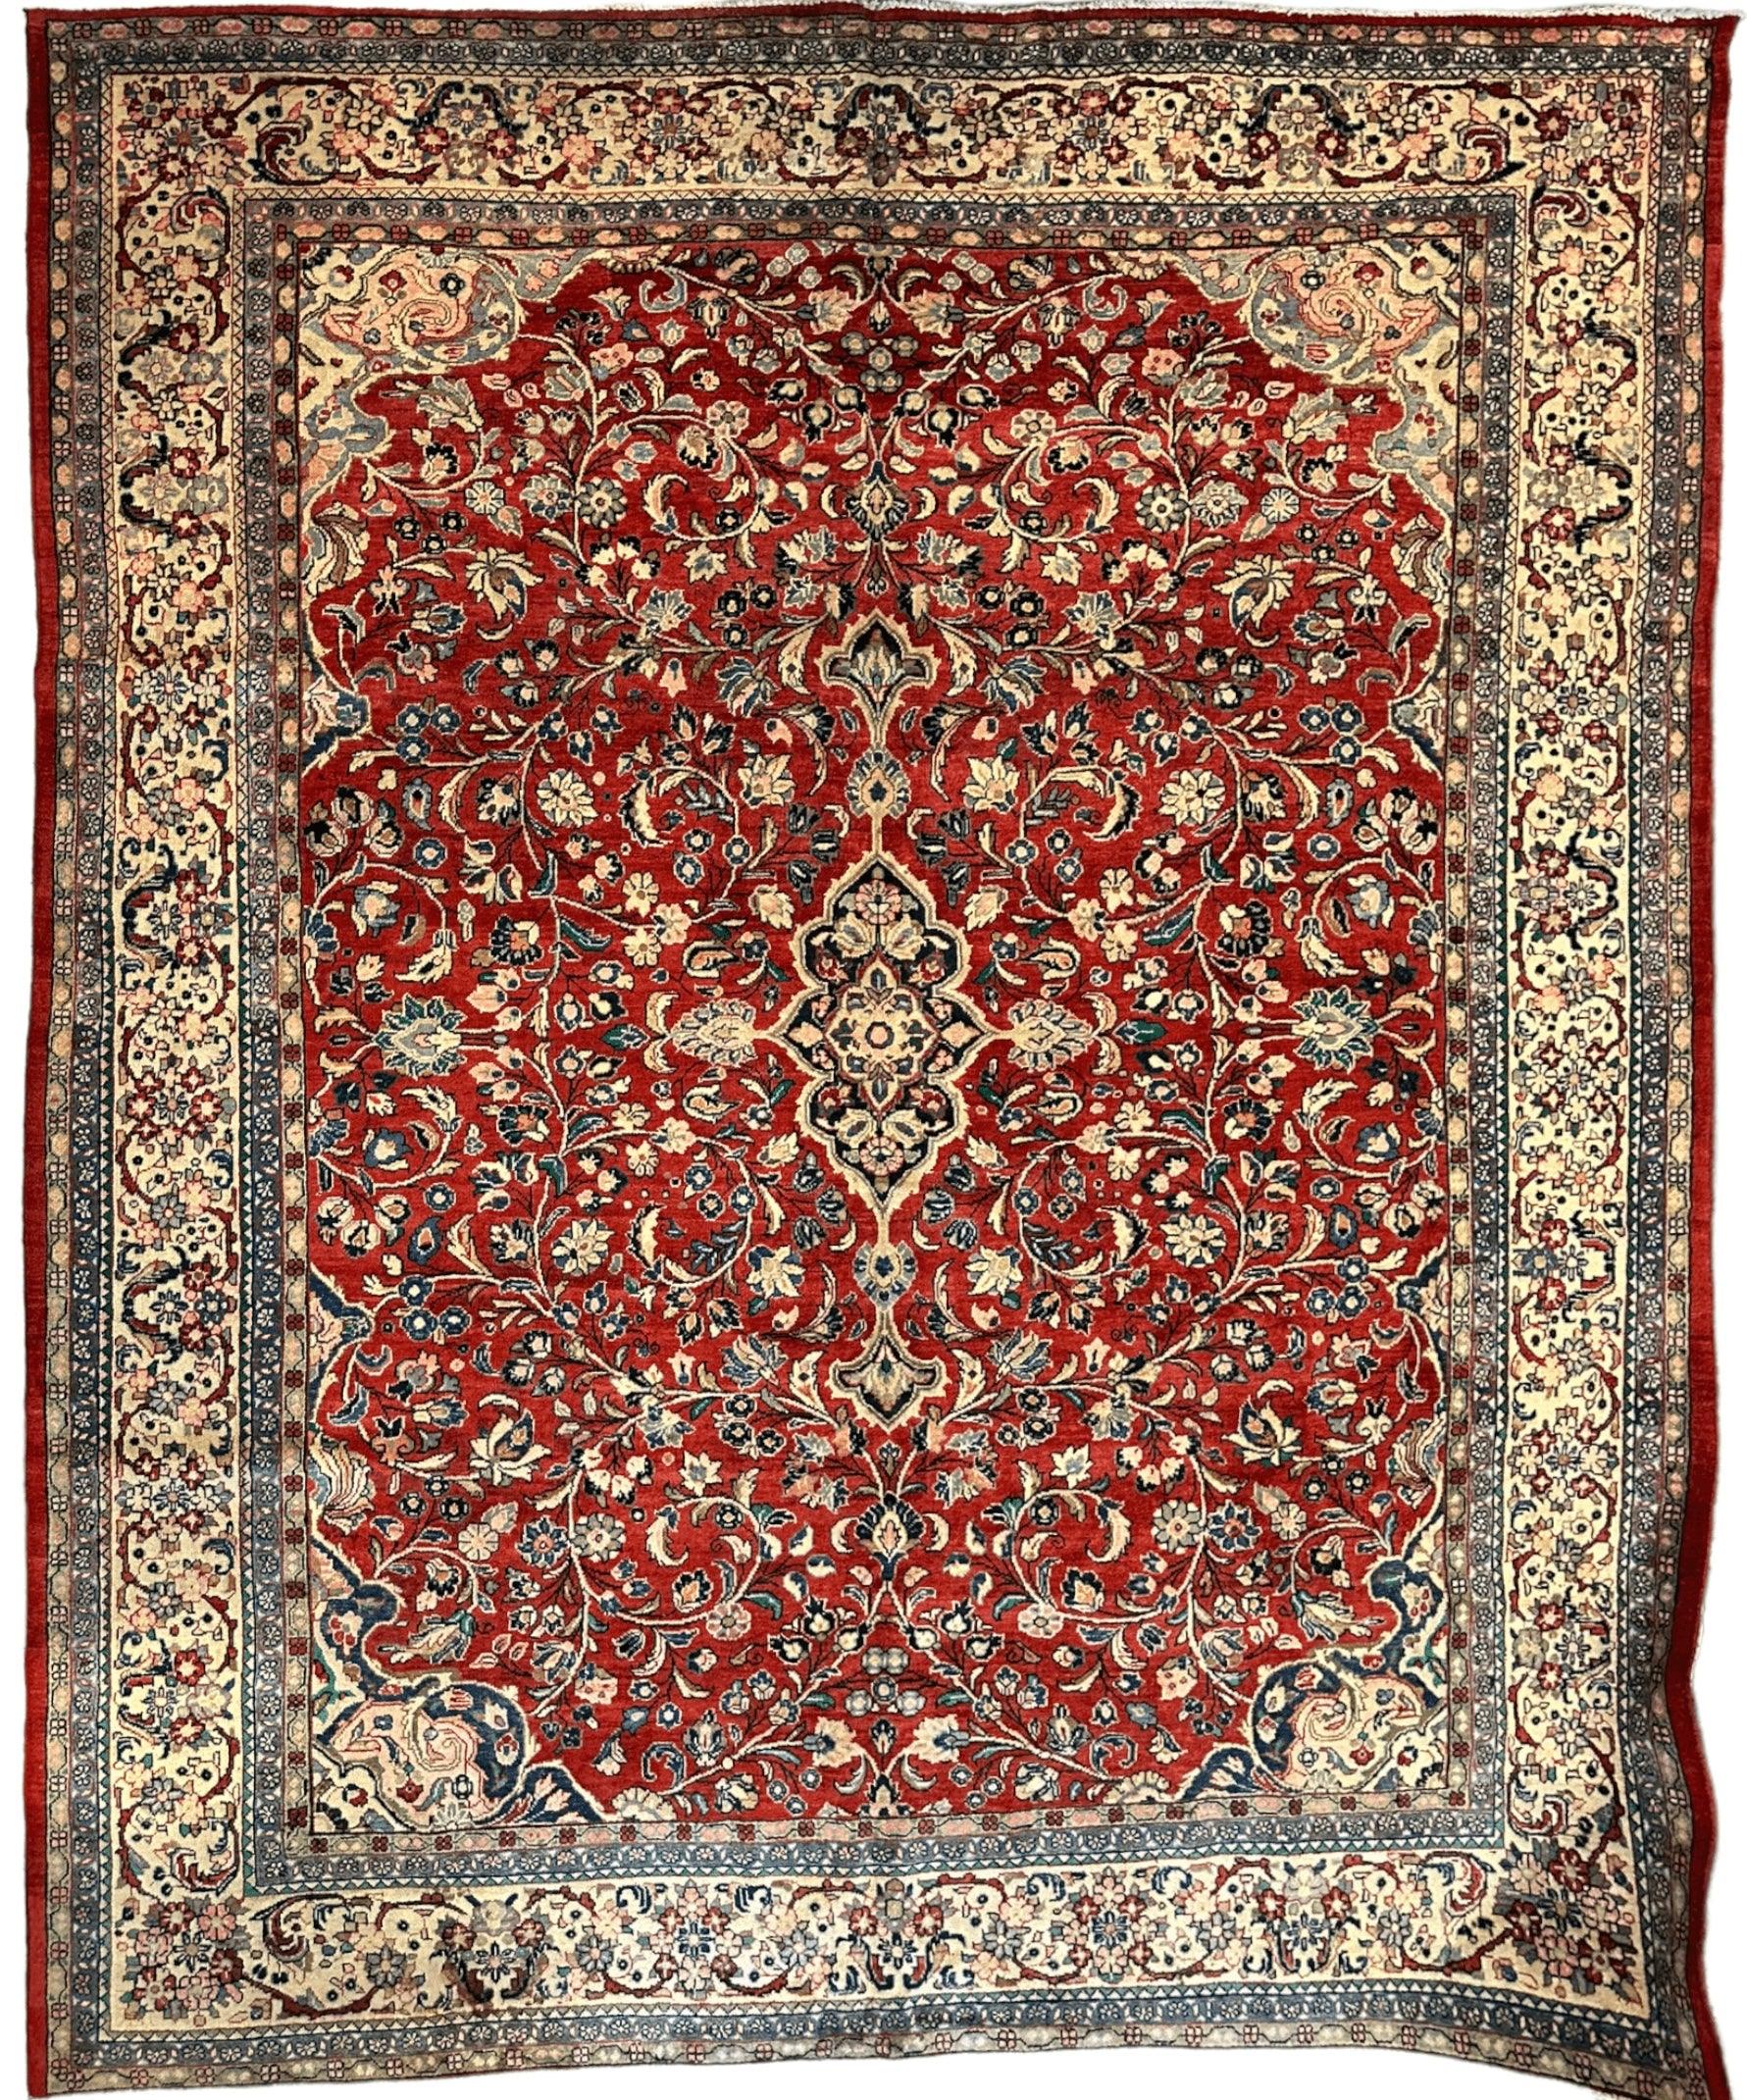 Handmade One-of-a-Kind Persian Mahal Rug - 10’ x 12’10”